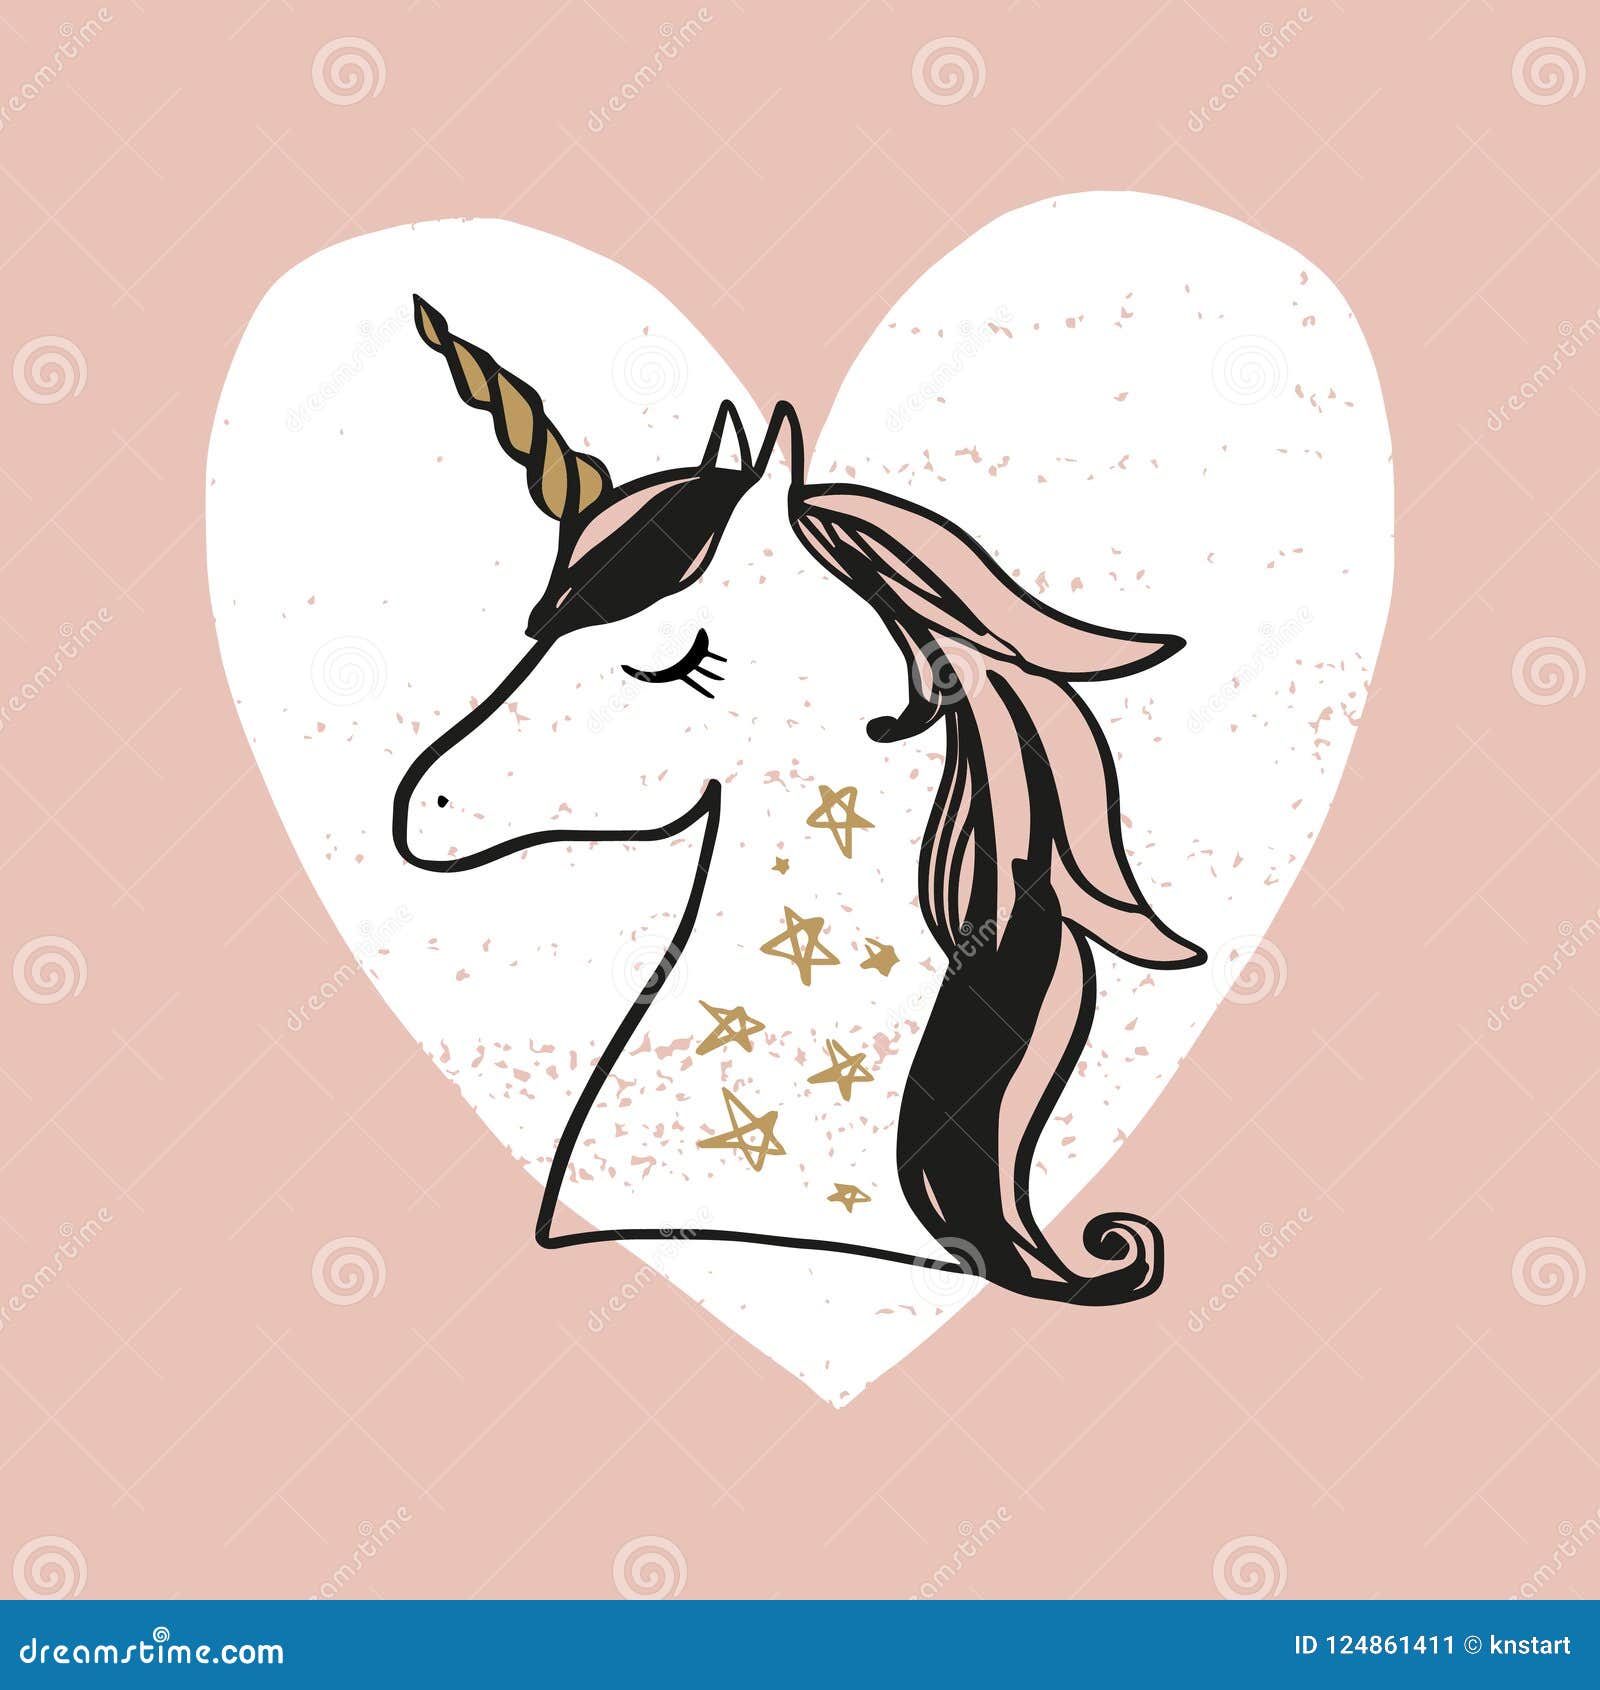 Download Unicorn Fantasy Cartoon RoyaltyFree Stock Illustration Image   Pixabay